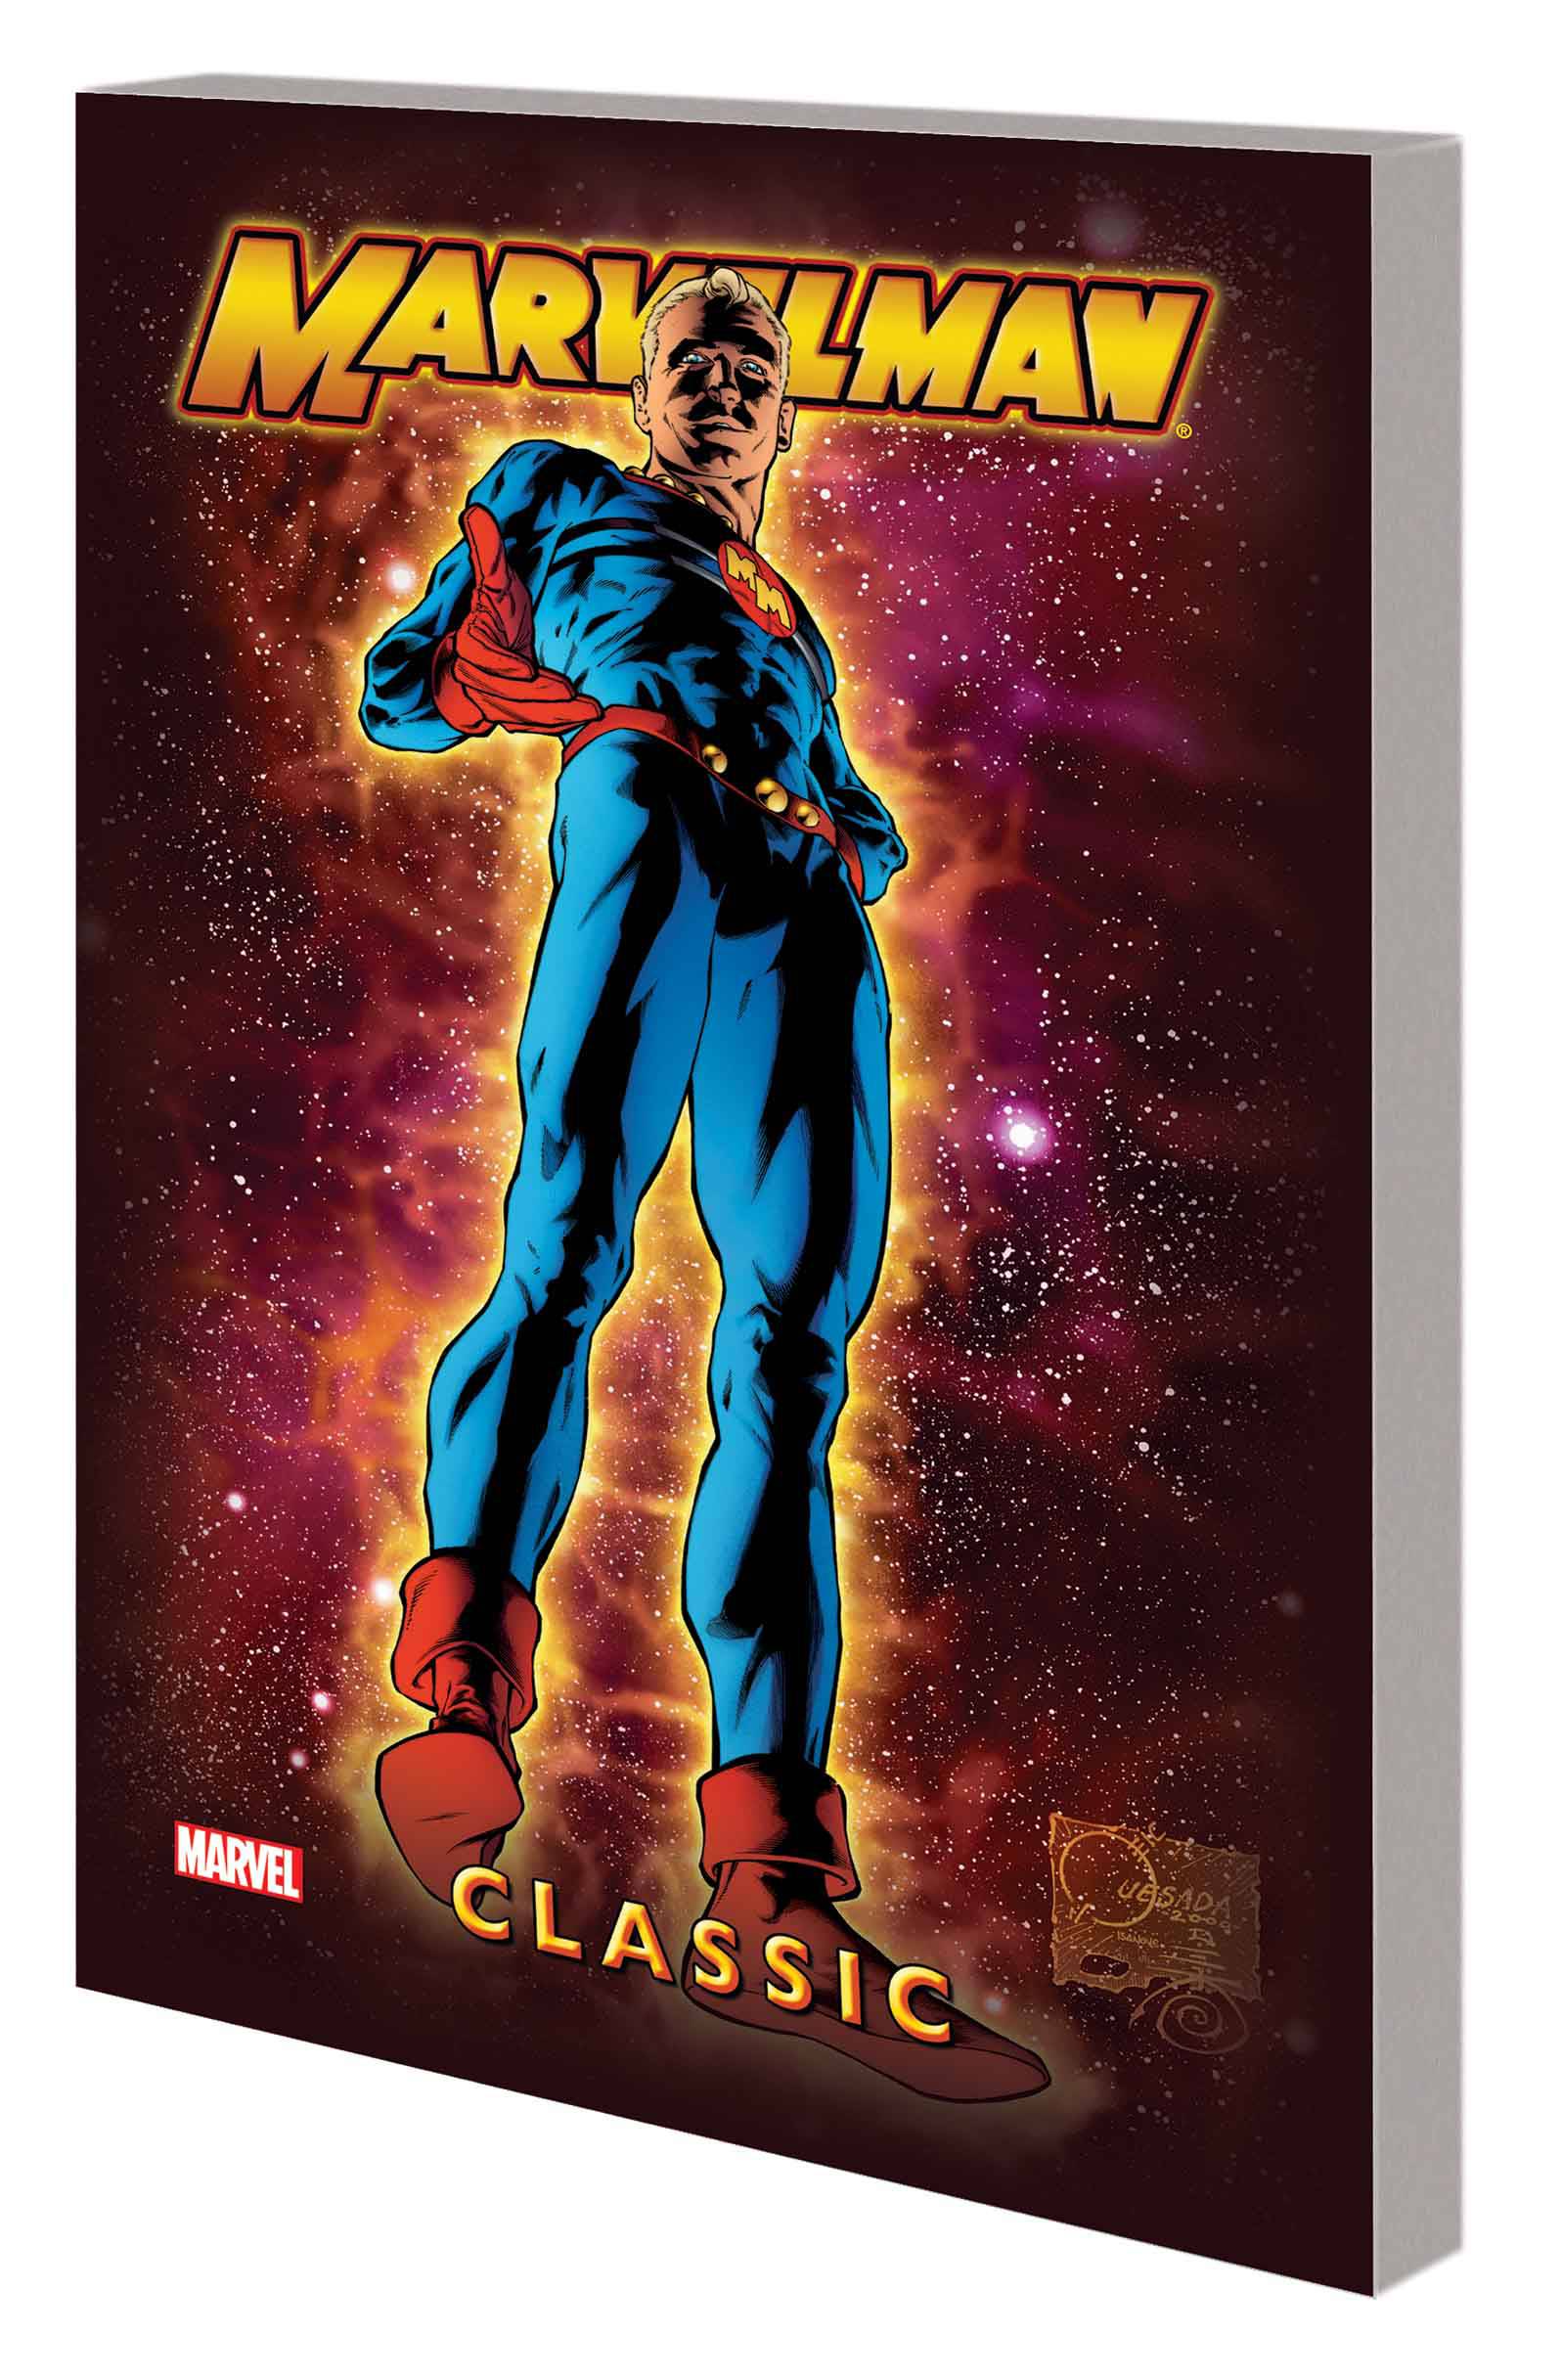 Marvelman Classic Graphic Novel Volume 1